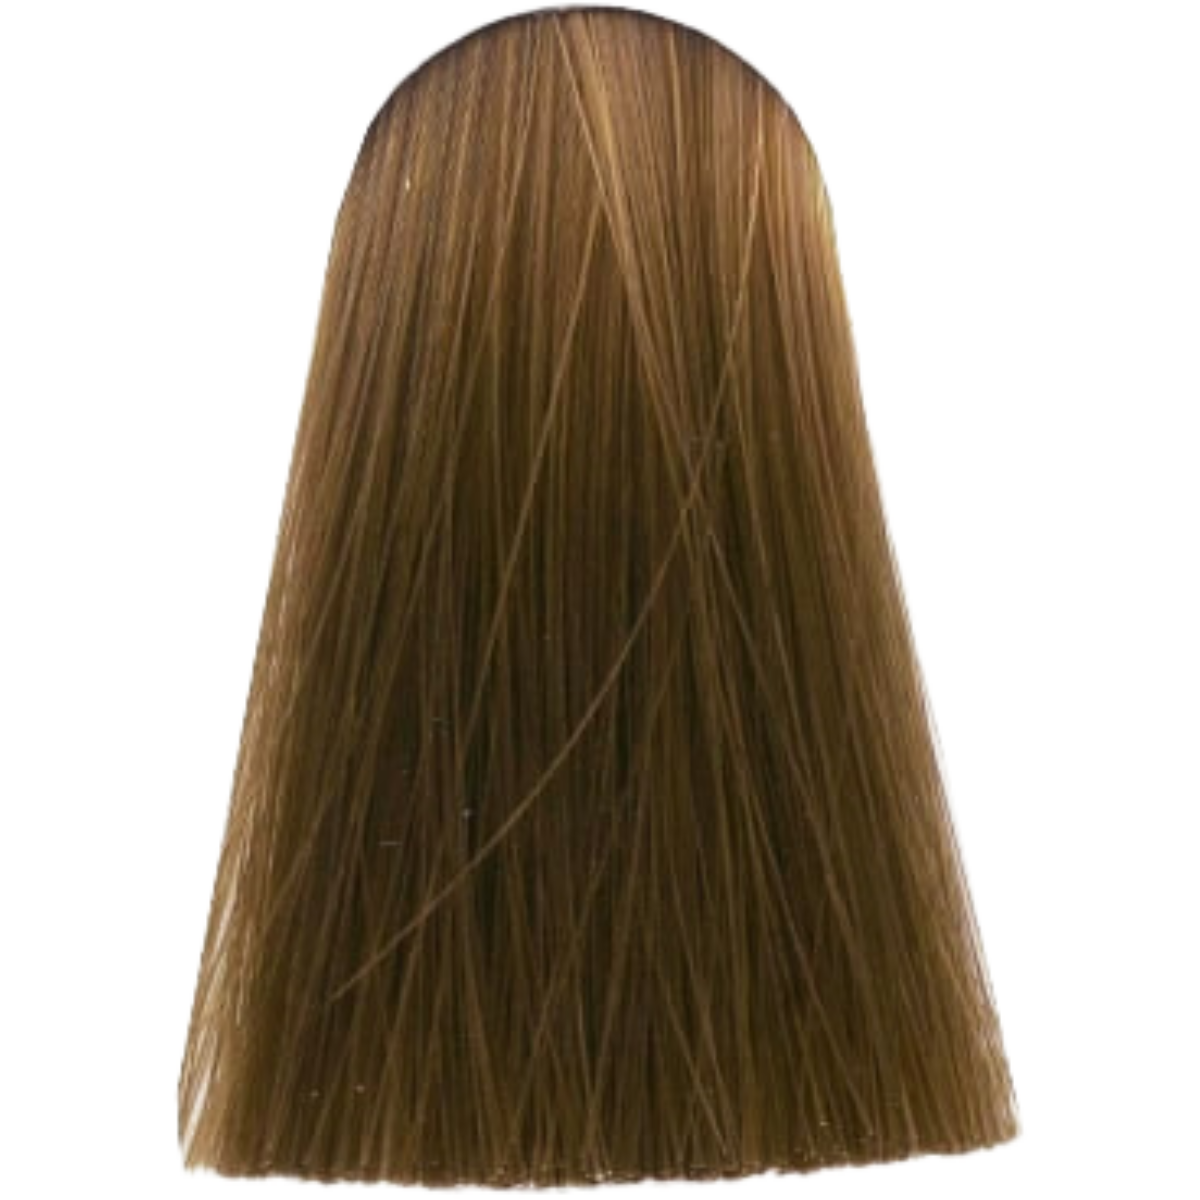 צבע שיער 8.0 LIGHT BLONDE NATURAL אינדולה INDOLA צבע בסיס לשיער 60 גרם